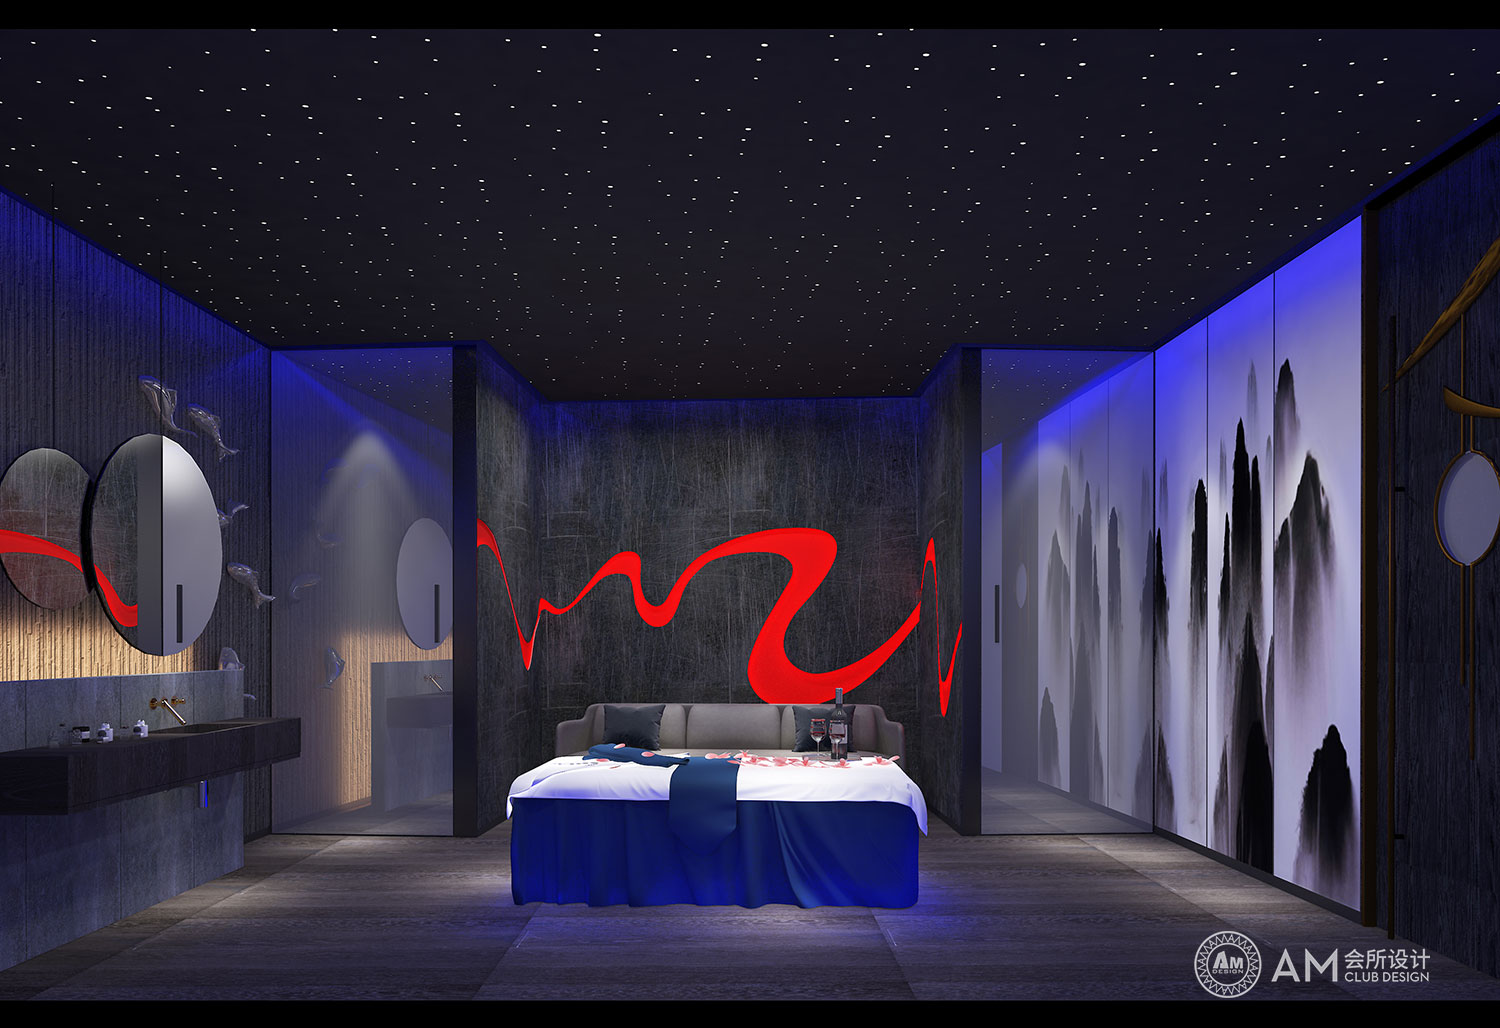 AM DESIGN | Spa room design of men's spa club in Suzhou